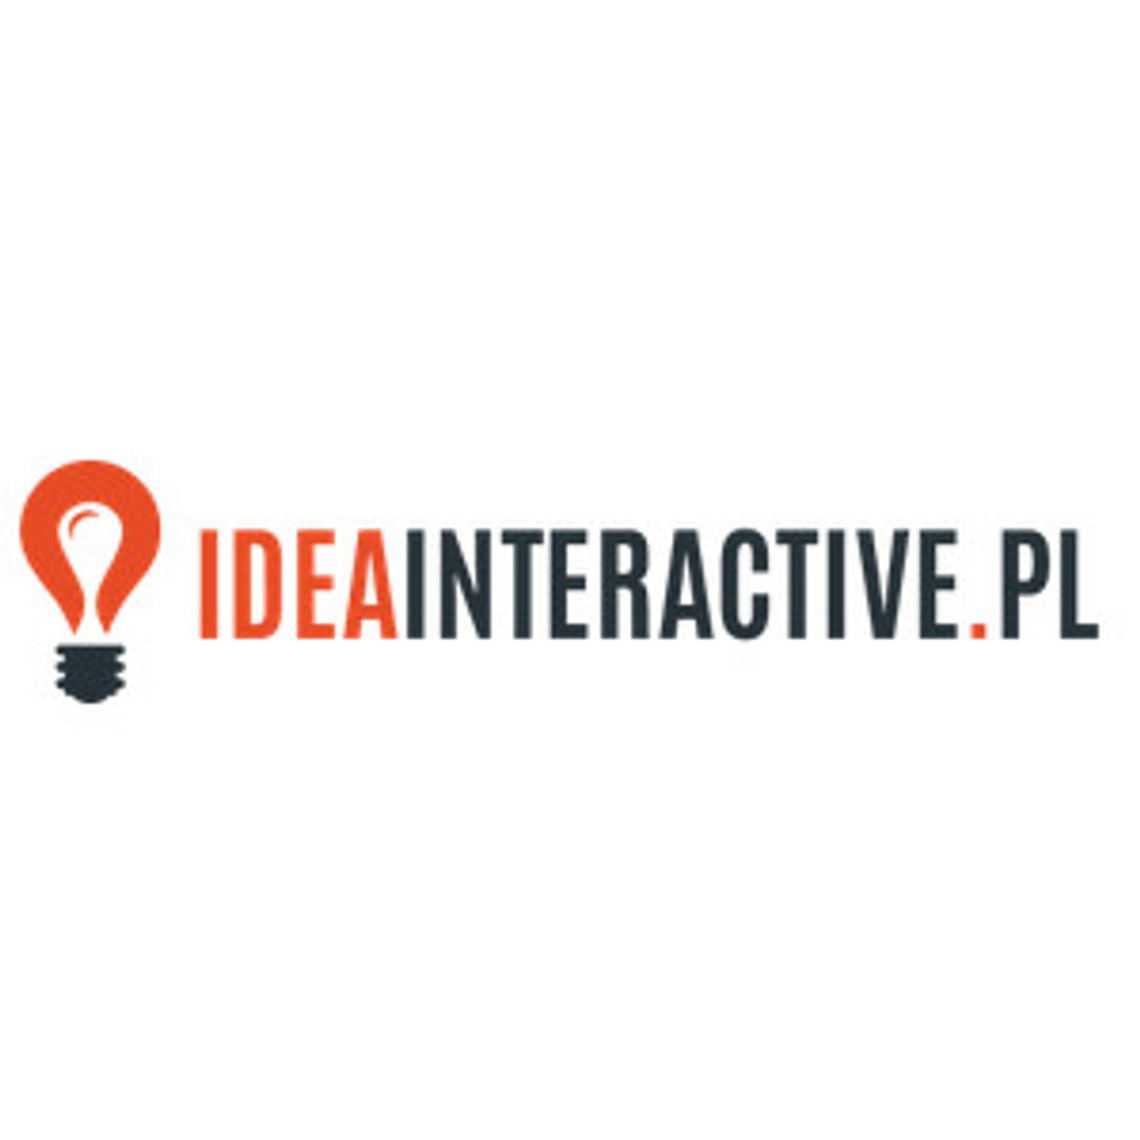 Idea Interactive